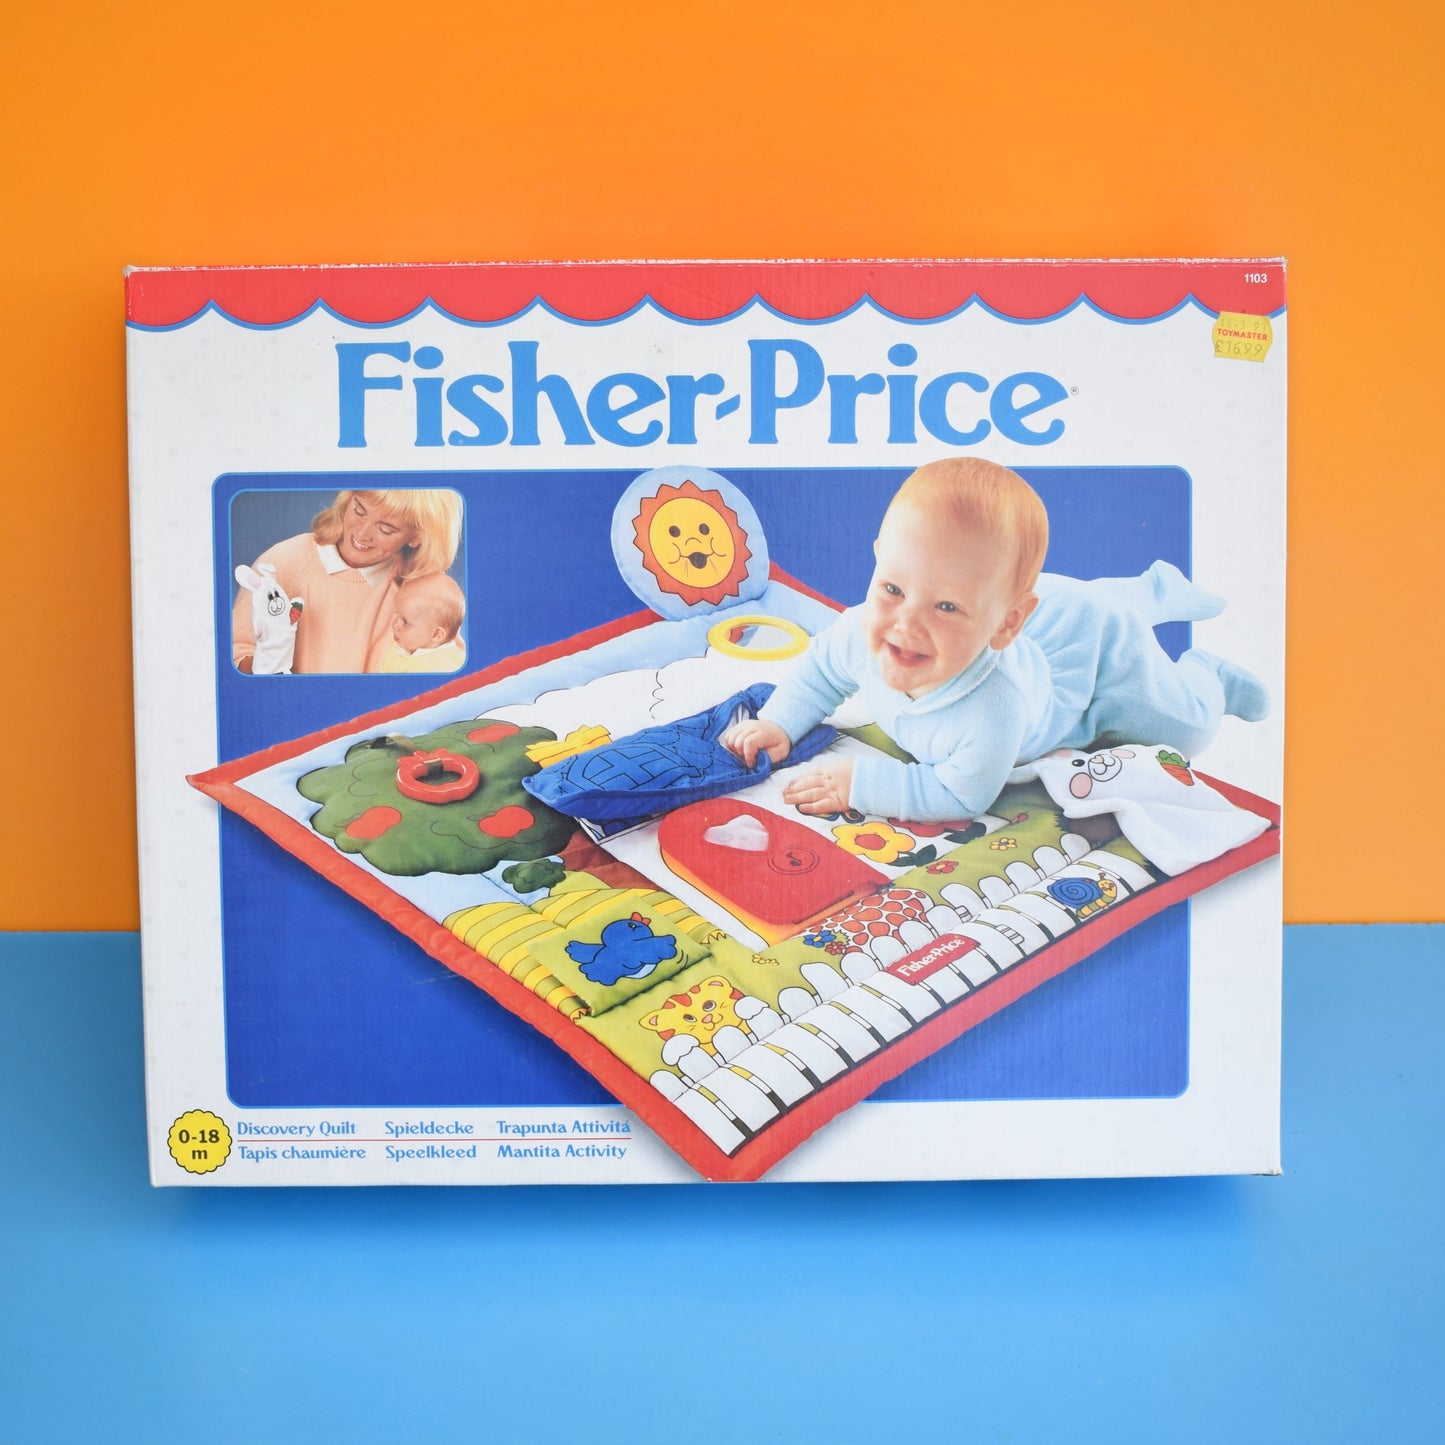 Vintage 1990s Fisher Price Play Mat- Unused